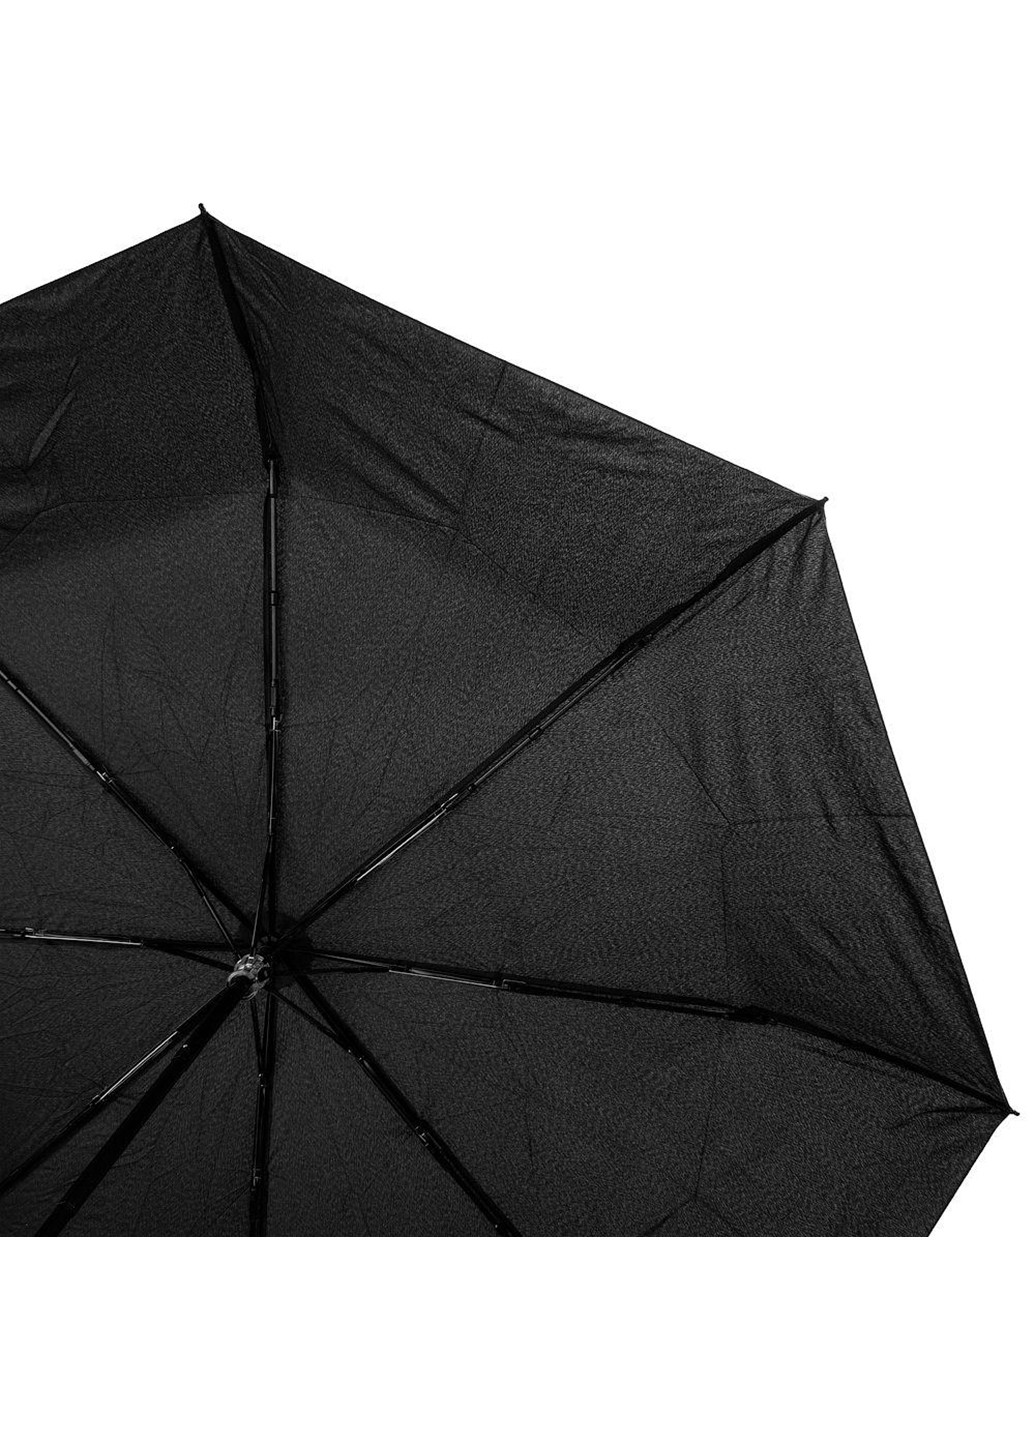 Чоловіча складна парасолька механічна 97 см ArtRain (255709341)